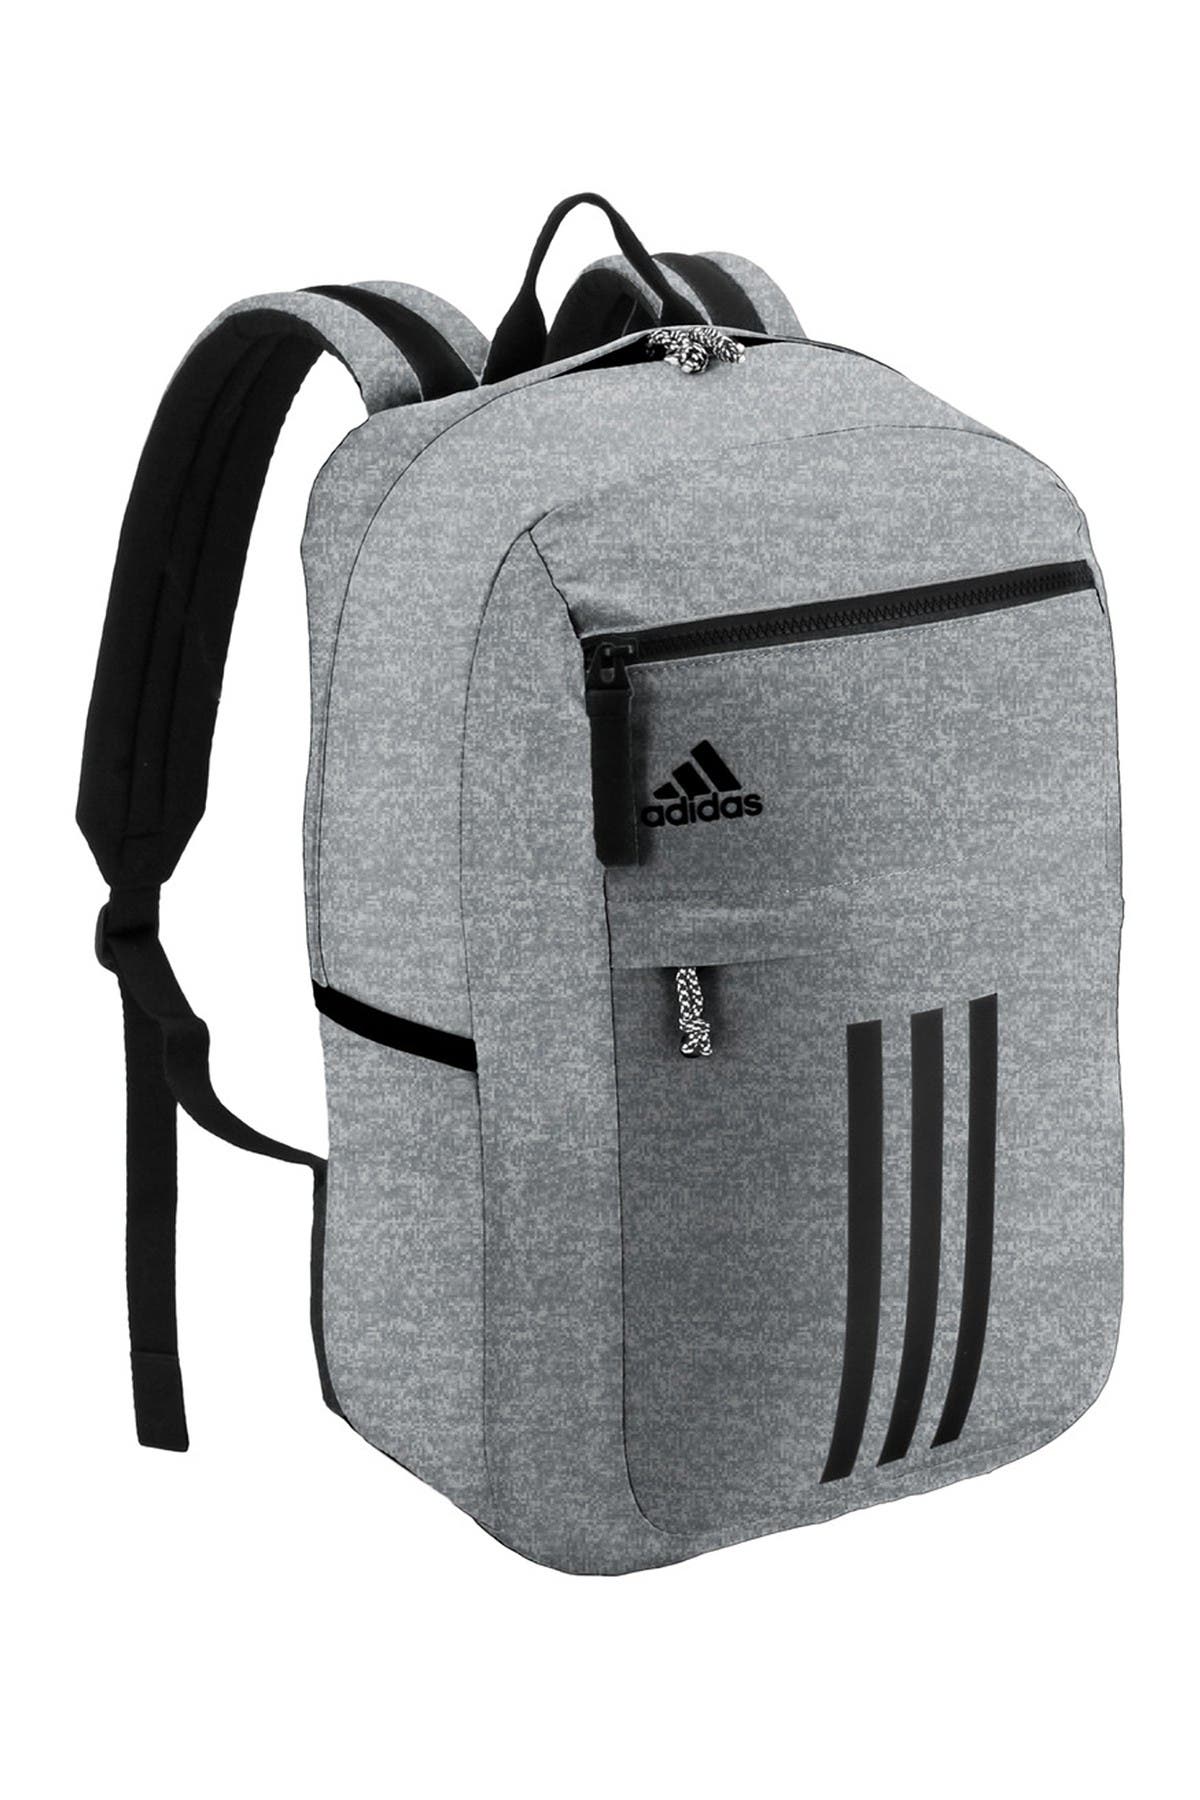 league 3 stripe backpack